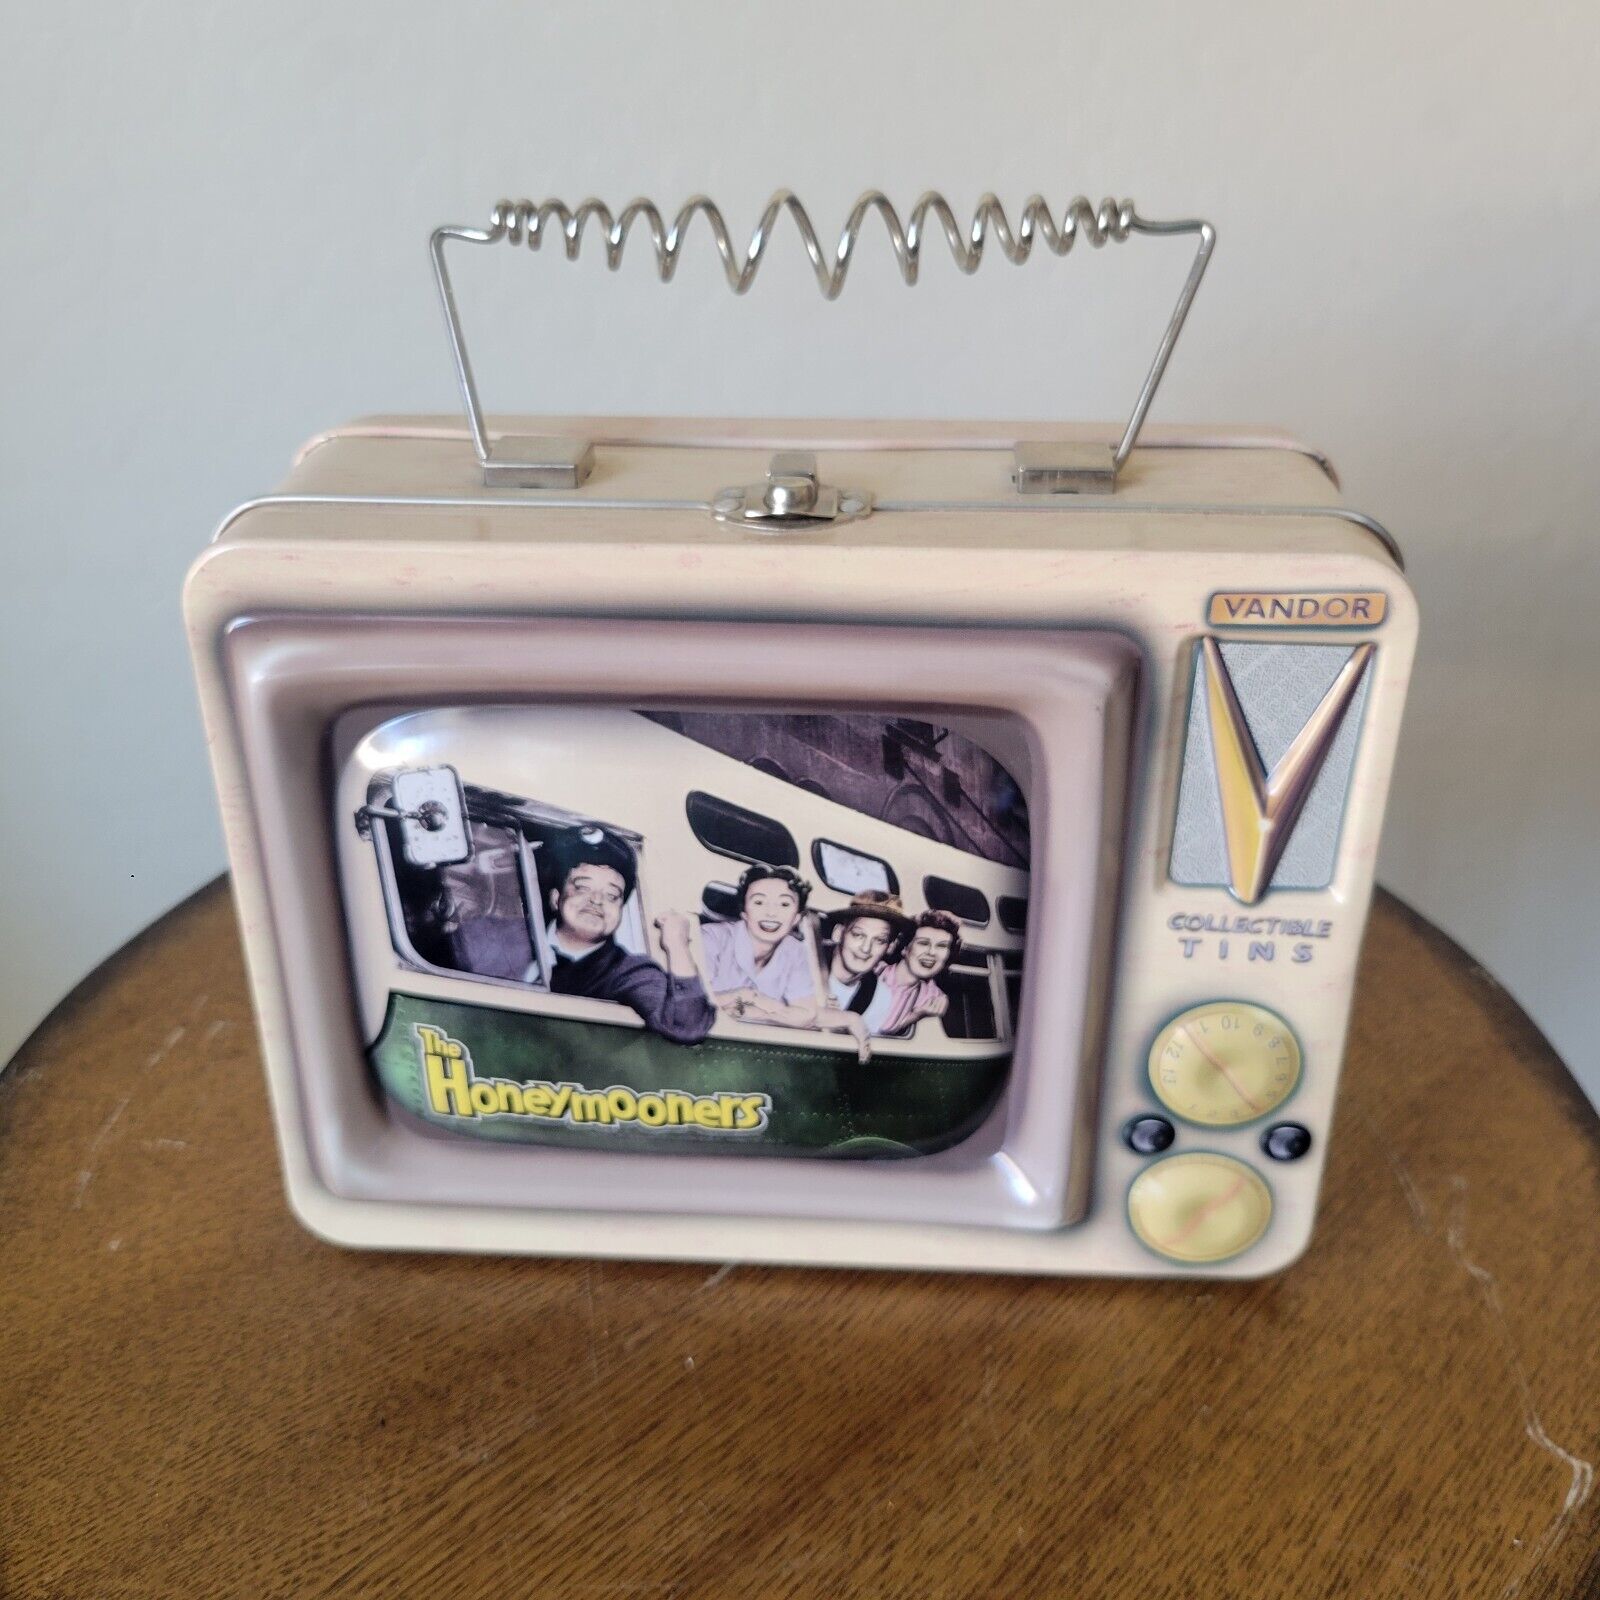 Vintage The Honeymooners Metal Lunchbox Vandor Collectible Tins 1999 Television